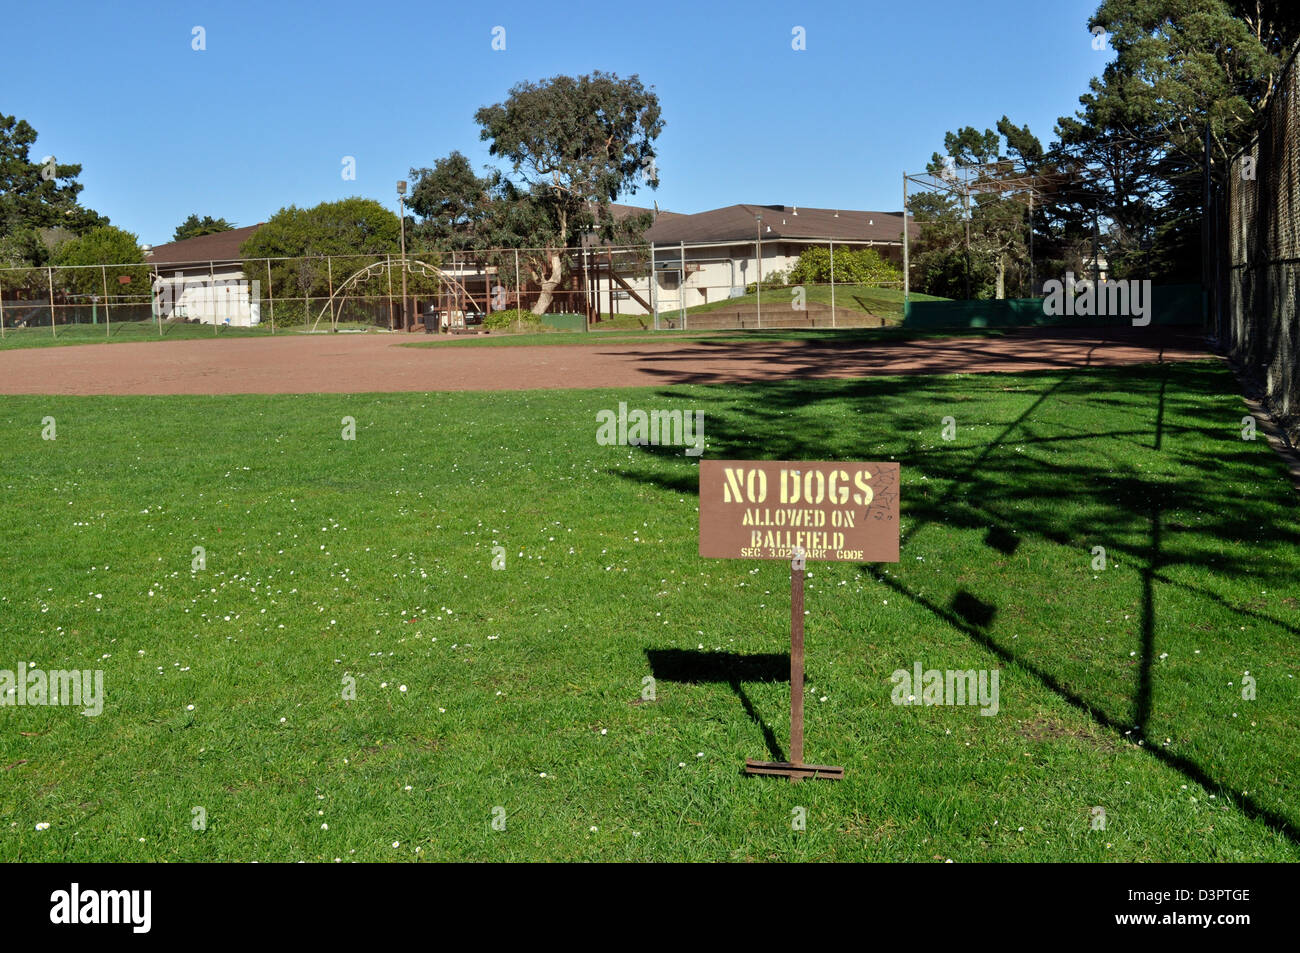 No Dogs allowed sign on Glen Park baseball field Stock Photo